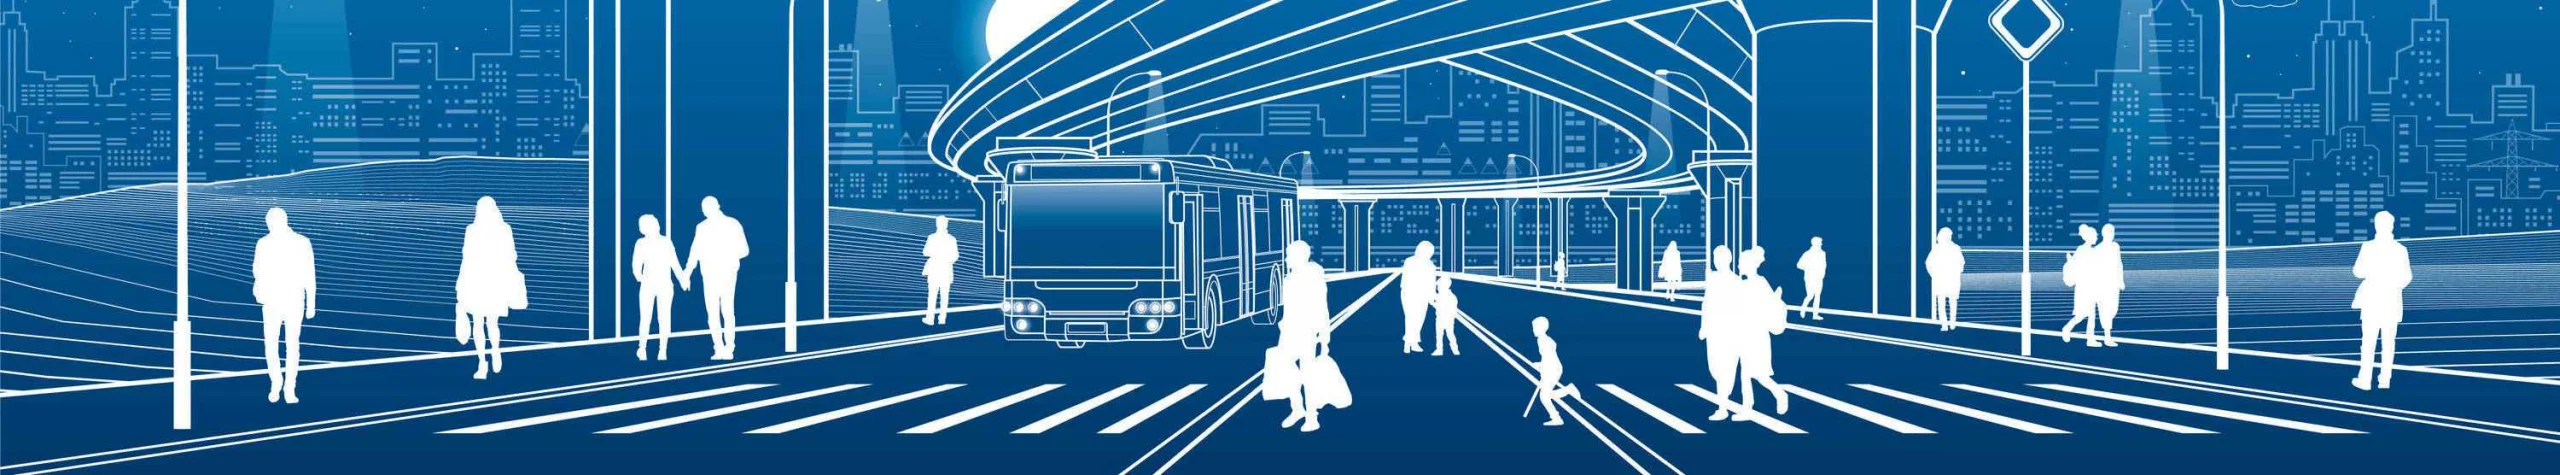 Ontario Smart Mobility Readiness Forum illustration